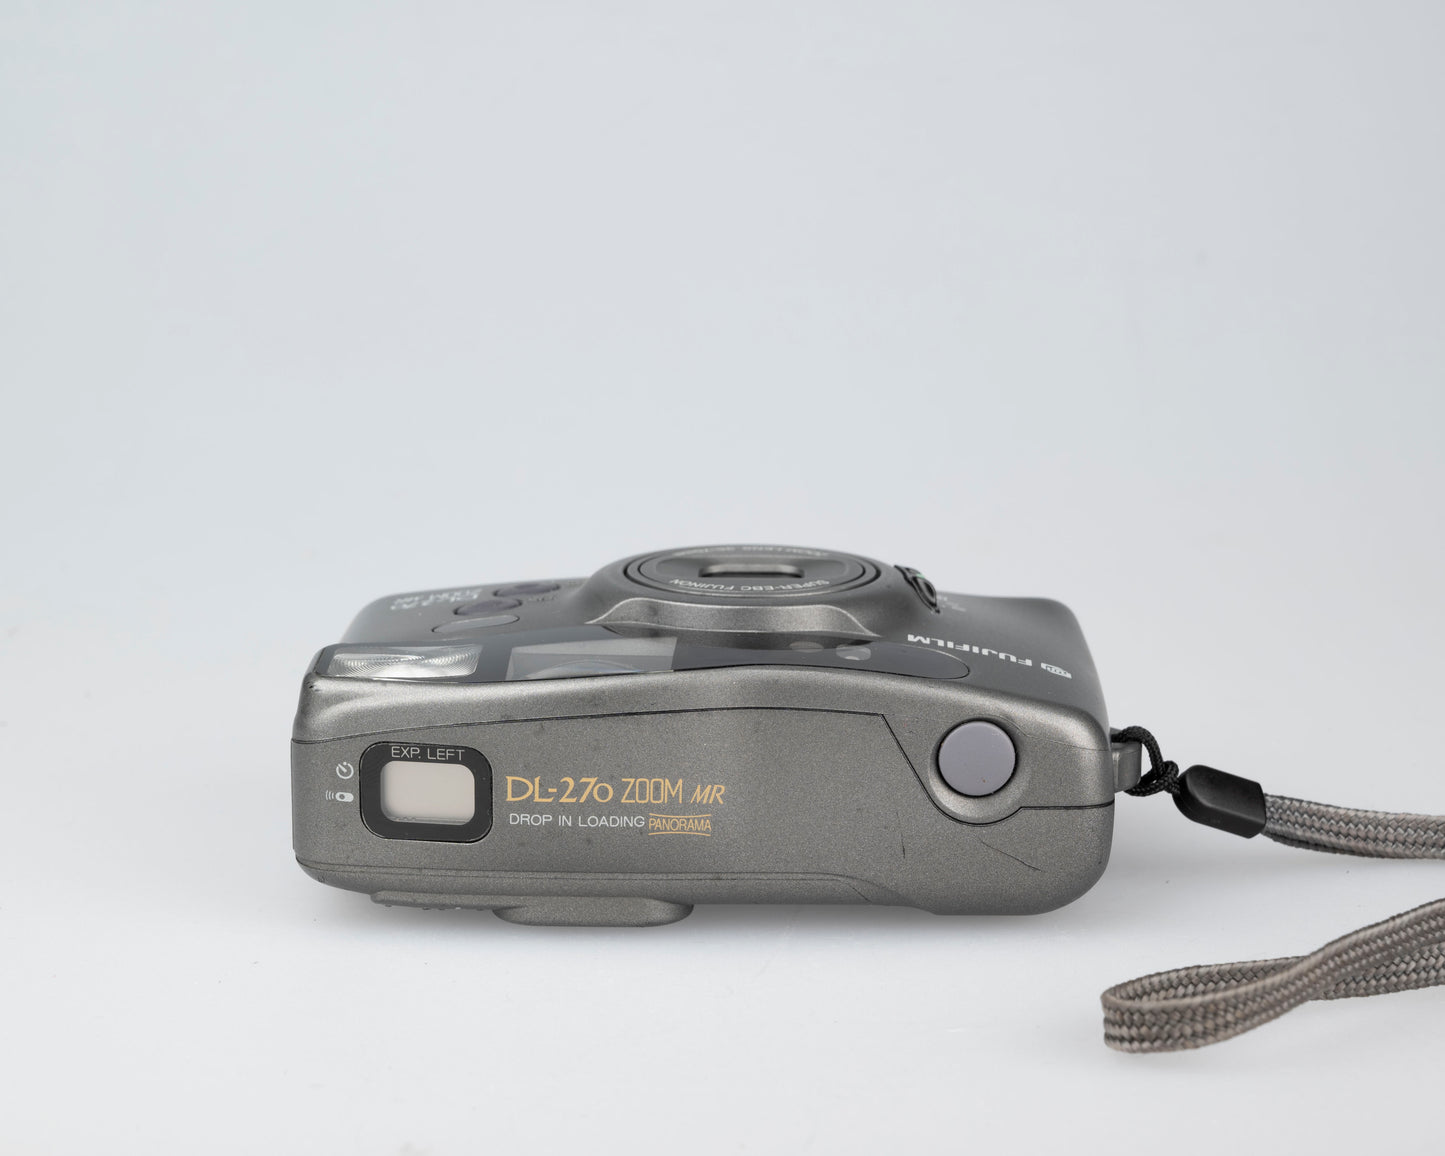 Fujifilm DL-270 Zoom MR 35mm camera (serial 7120520)